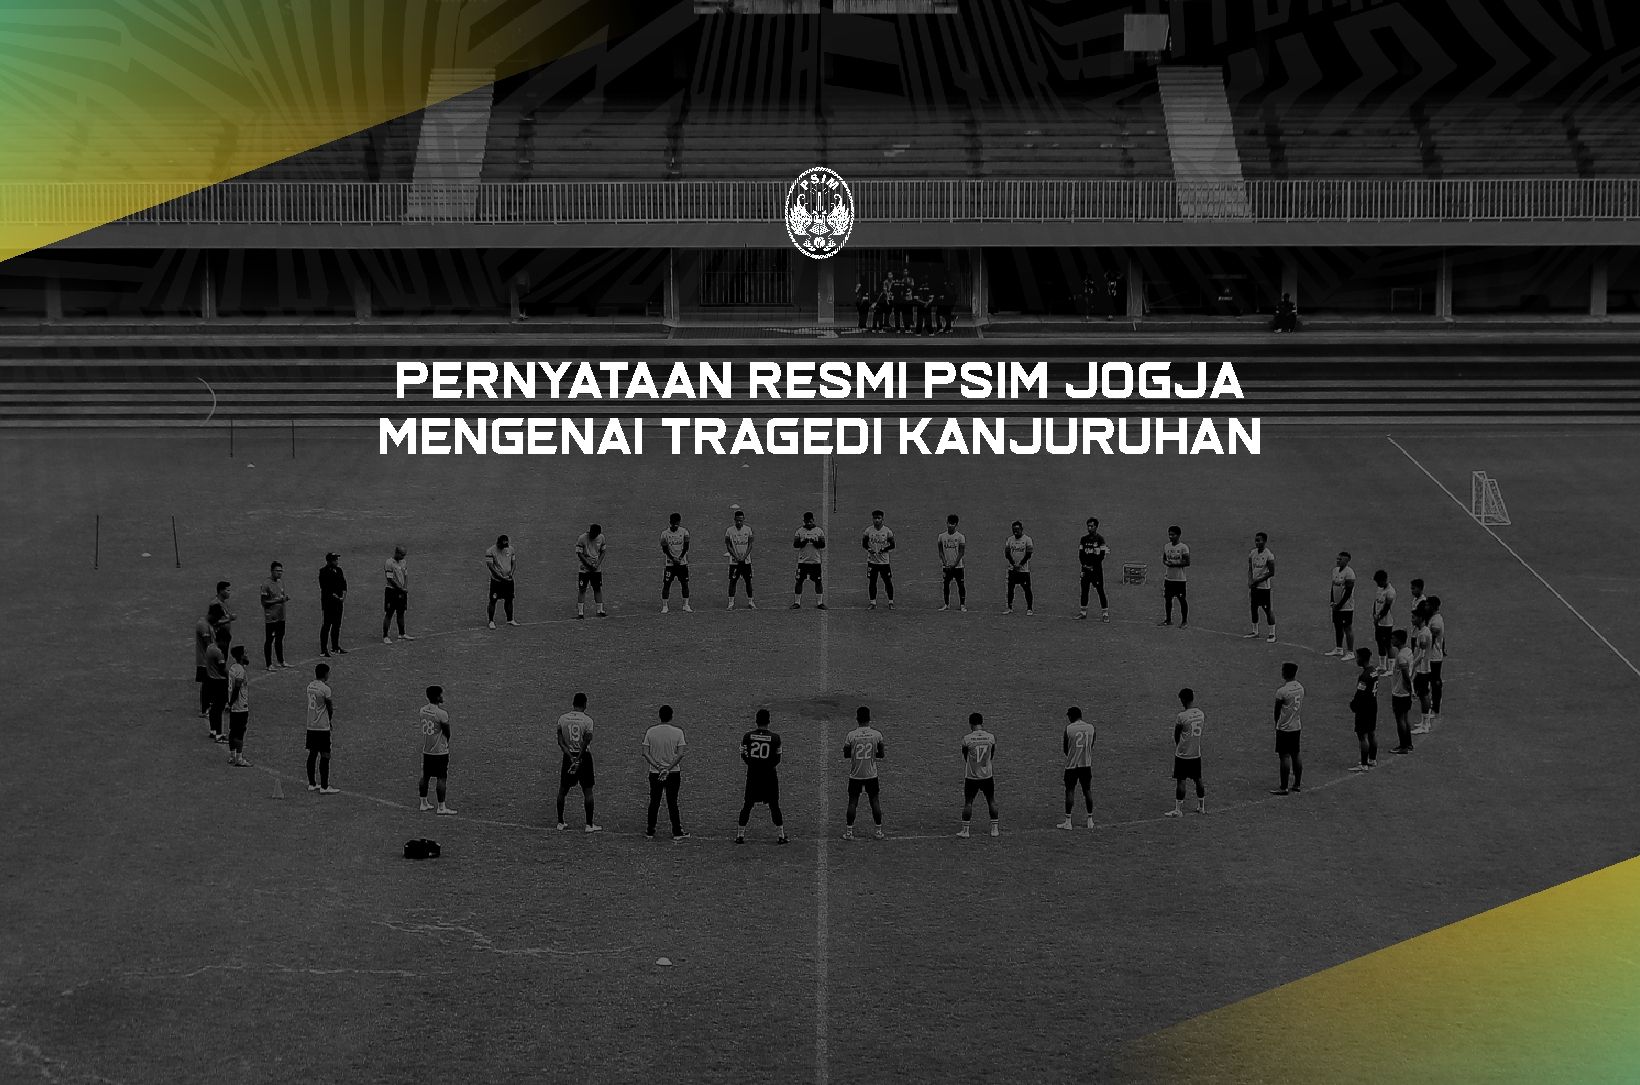 Manajemen PSIM Yogyakarta telah resmi menetapkan sikapnya atas terjadinya Tragedi Kanjuruhan yang telah menewaskan 131 korban jiwa tersebut.